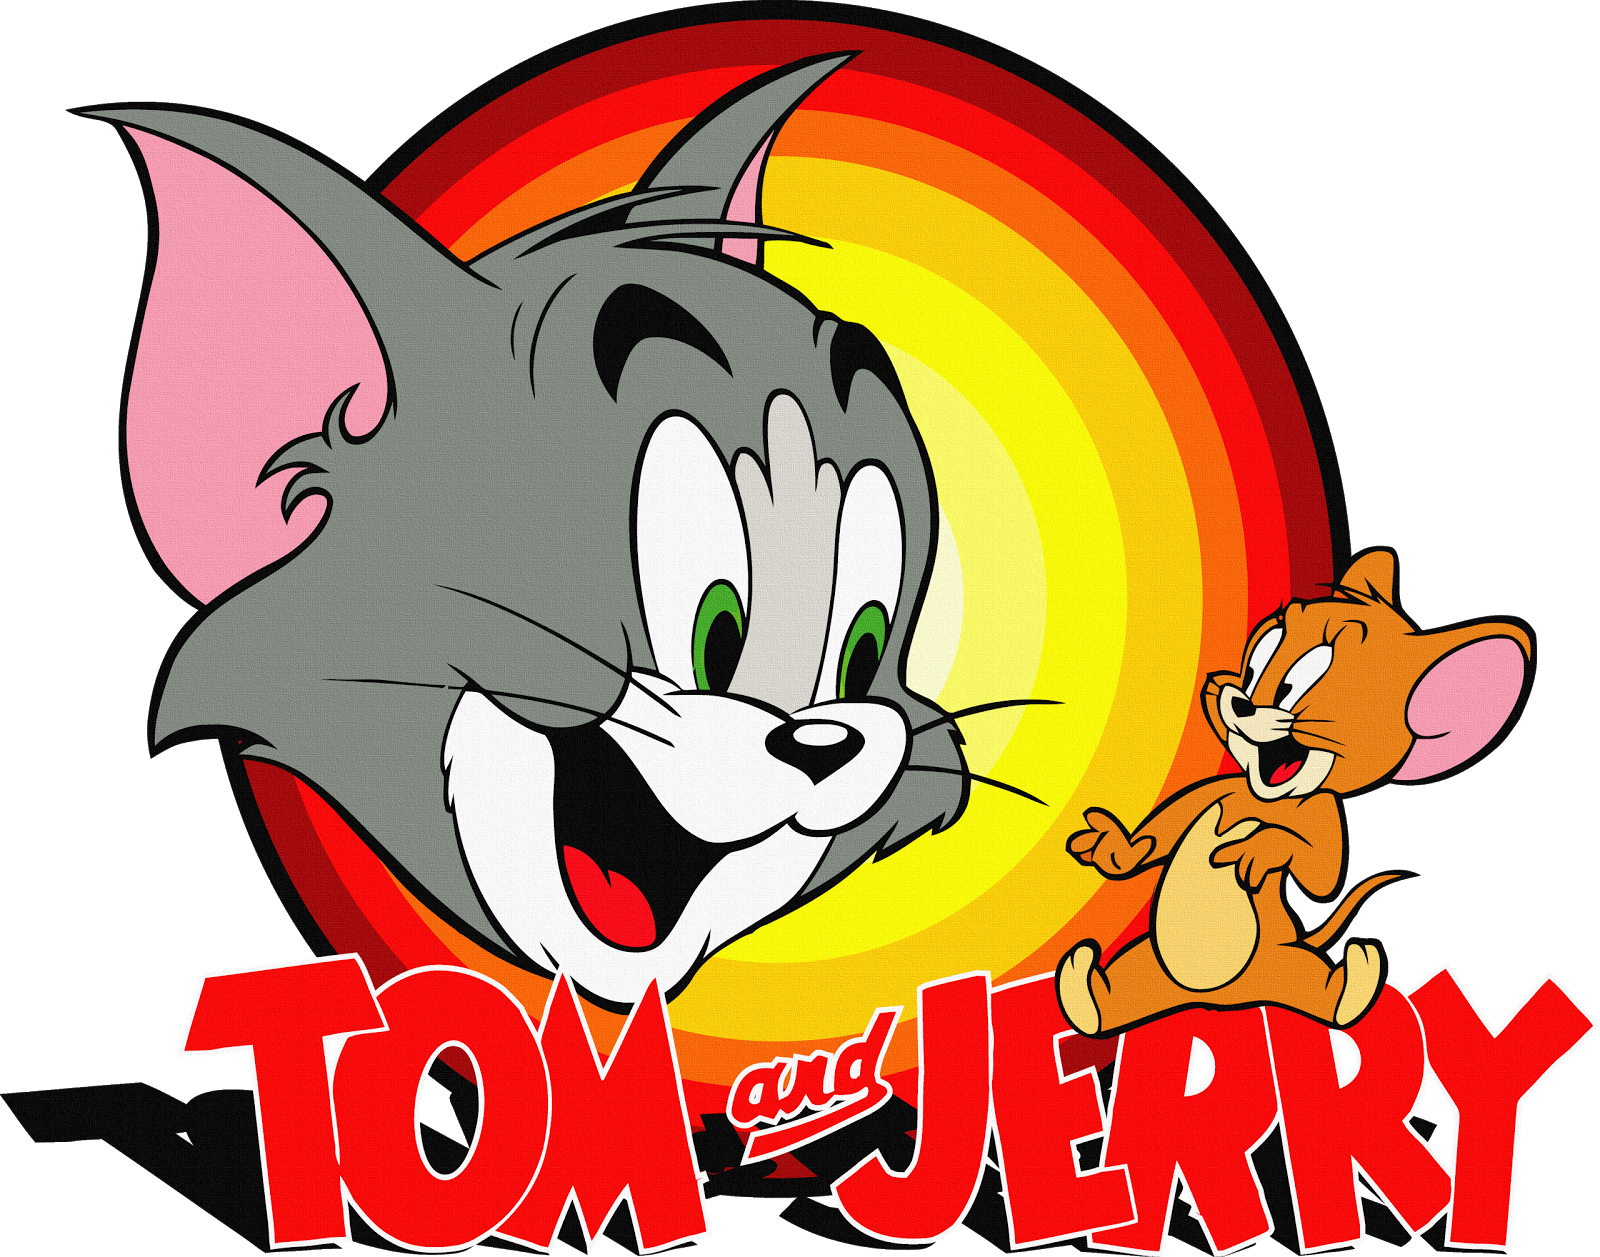 Tom And Jerry Cartoon Logo PNG Image - PurePNG | Free transparent CC0